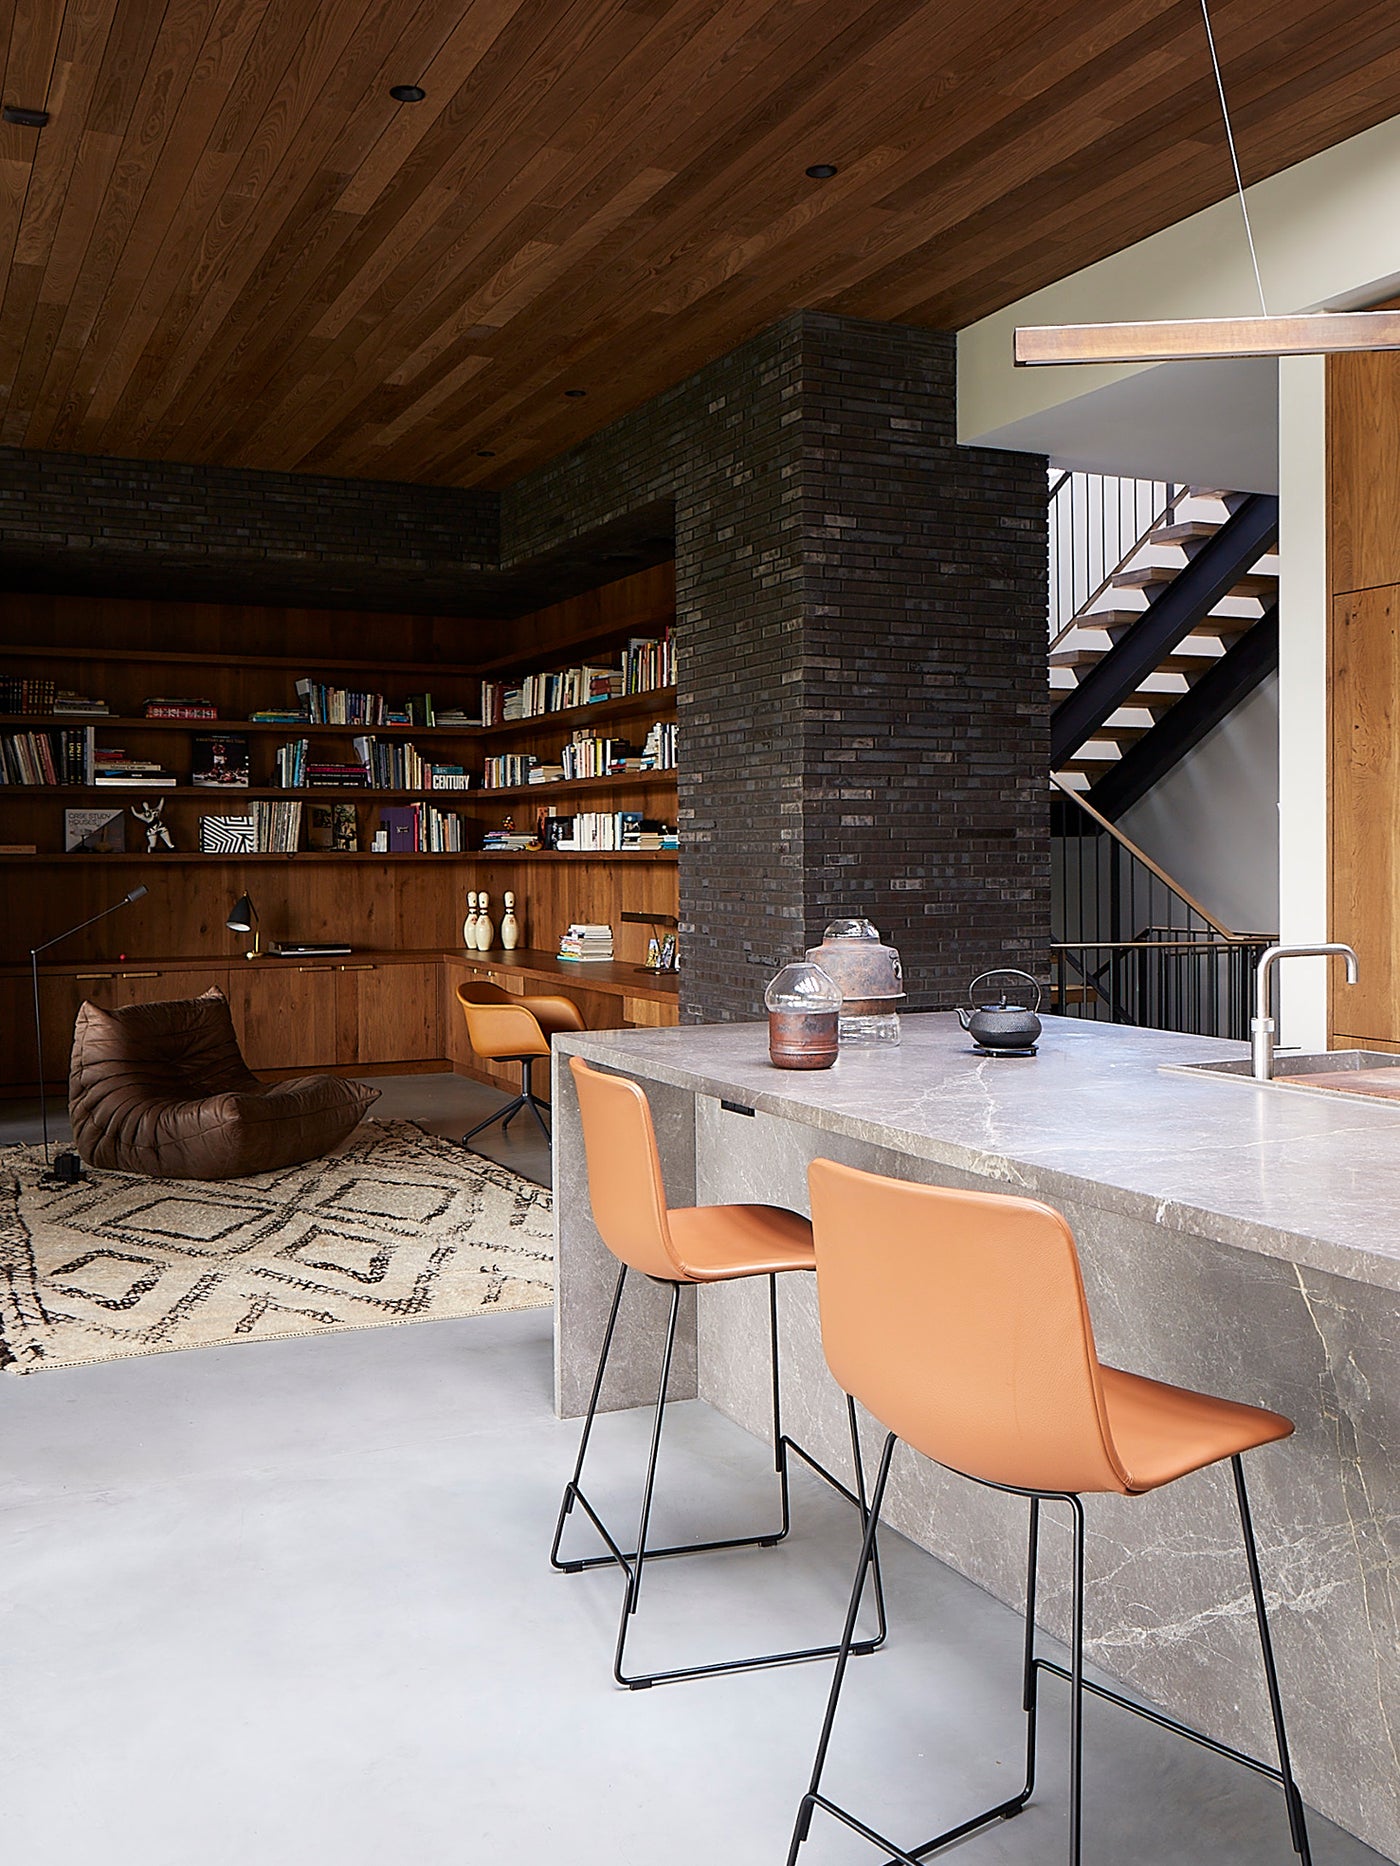 Artempo Interior Architecture Design - Kasia Gatkowska for ELLE - Enter The Loft